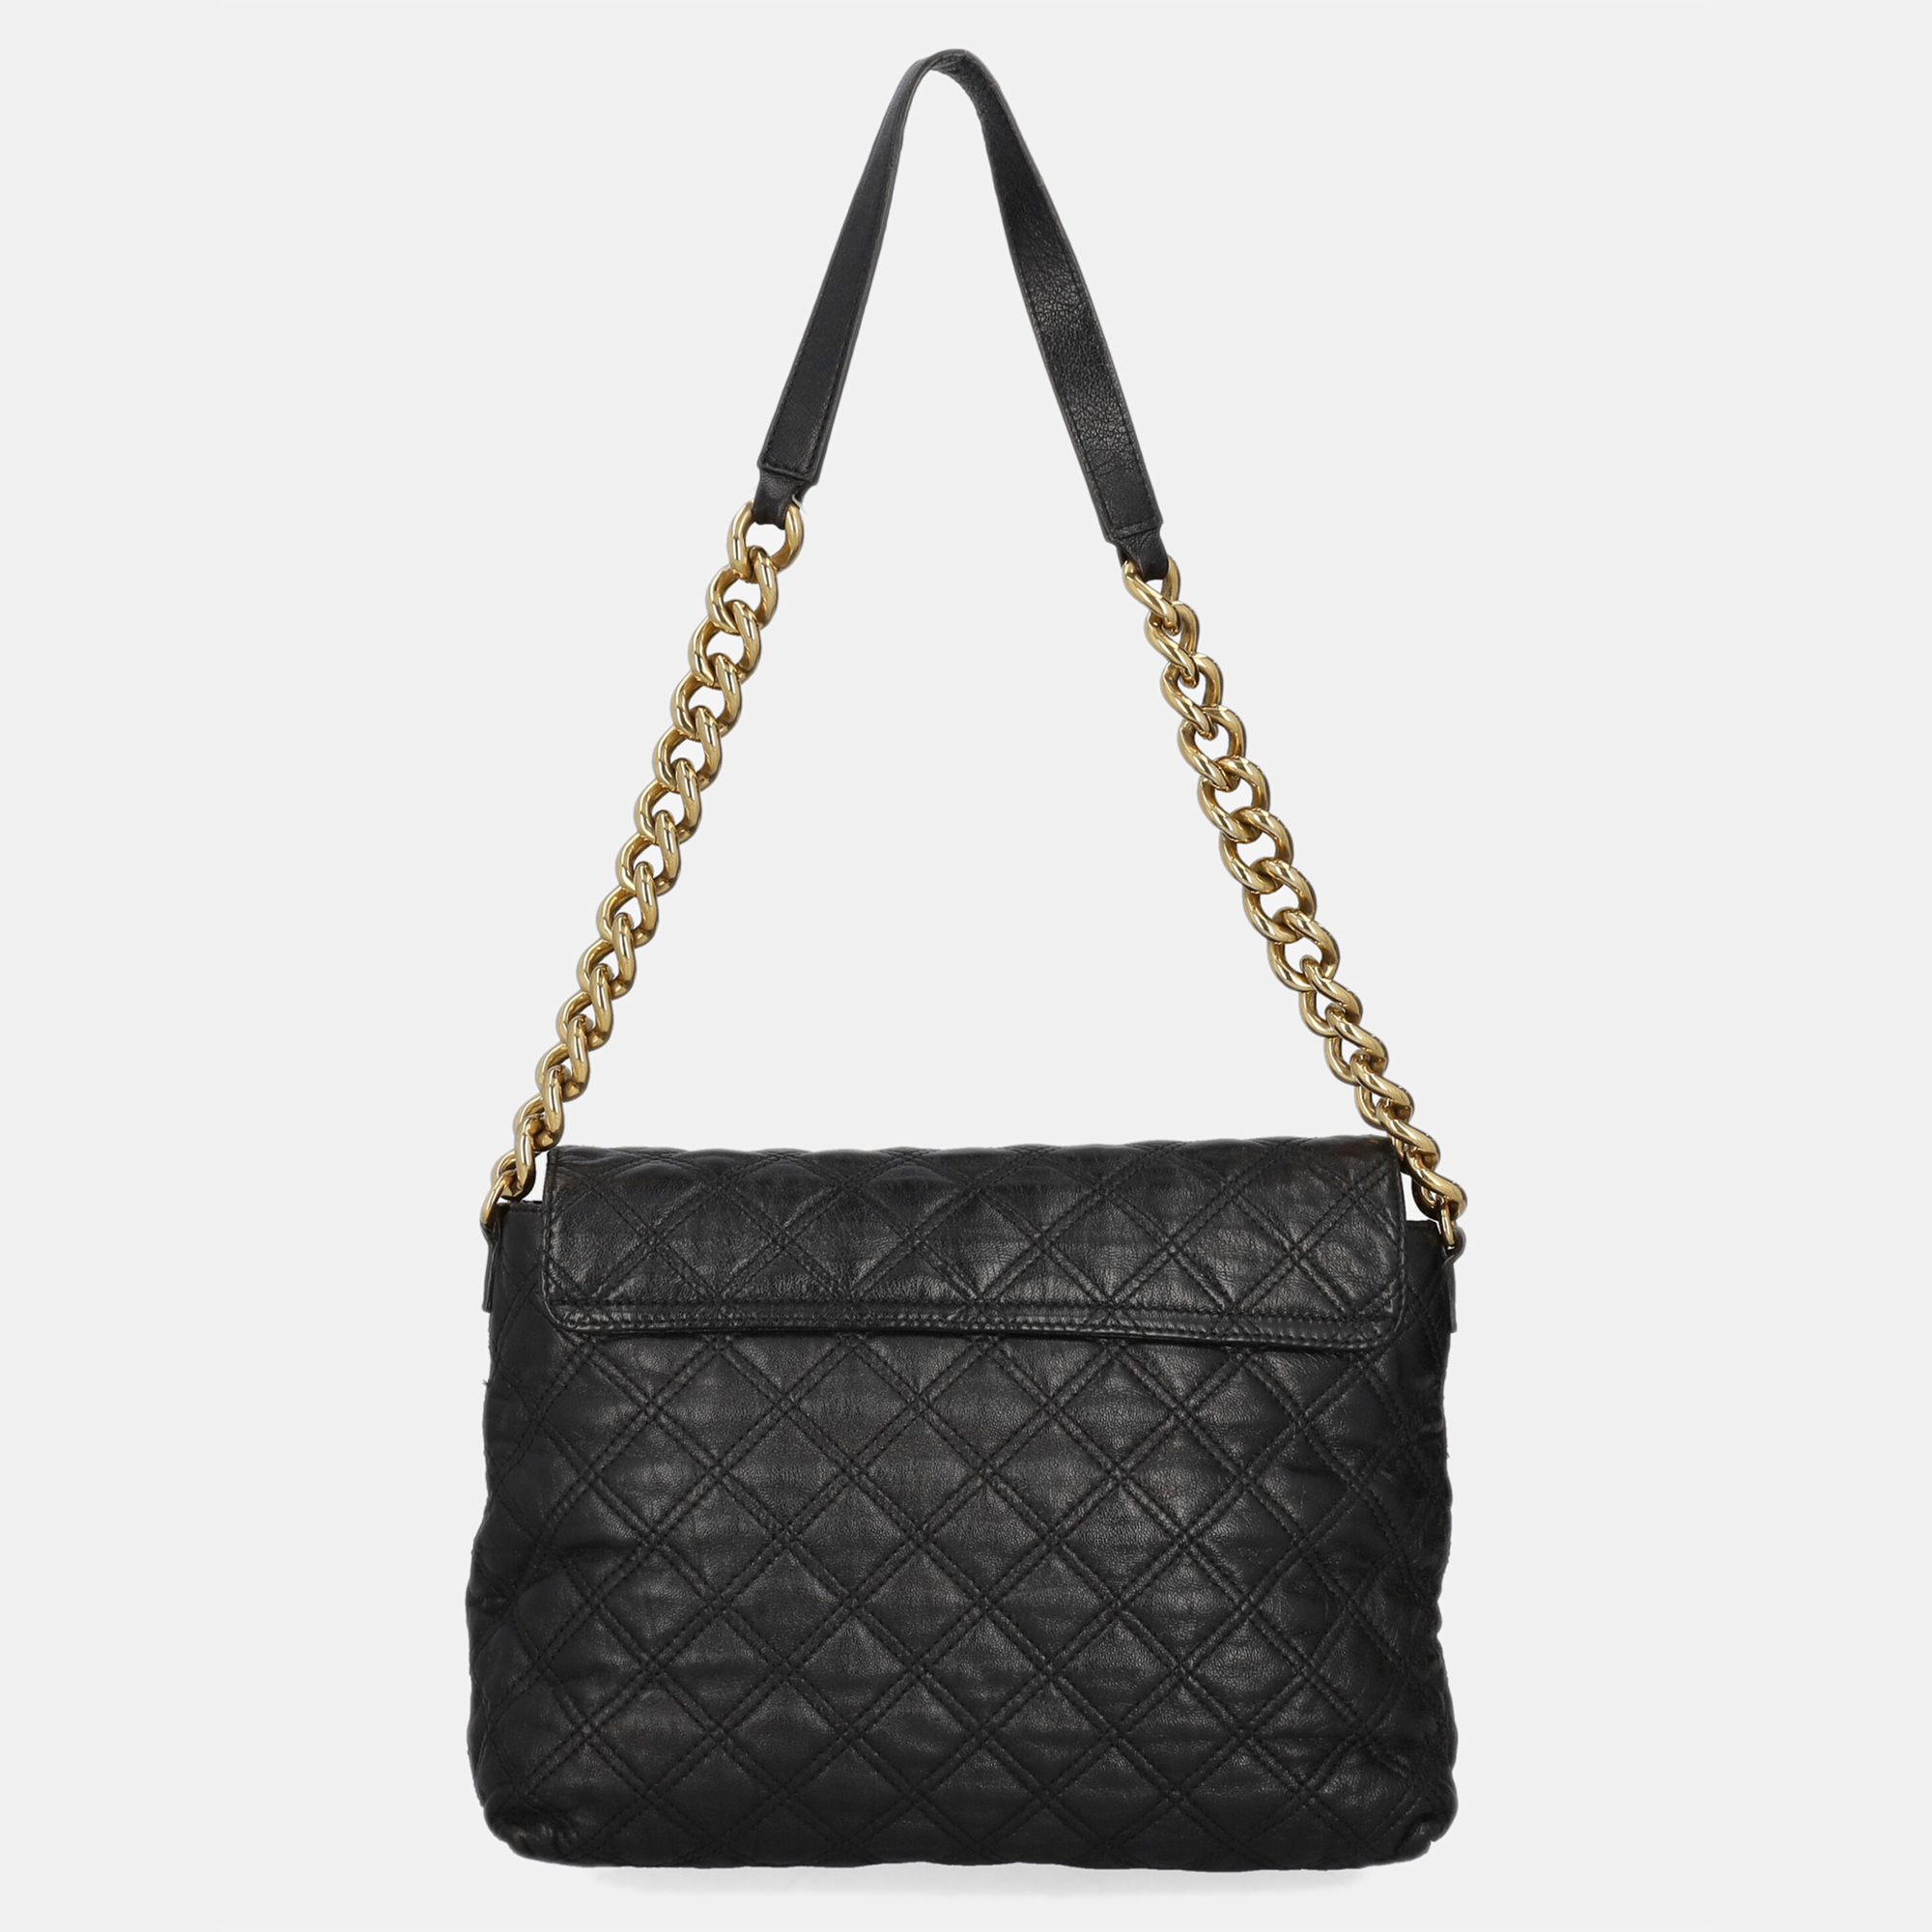 Marc Jacobs  Women's Leather Shoulder Bag - Black - One Size